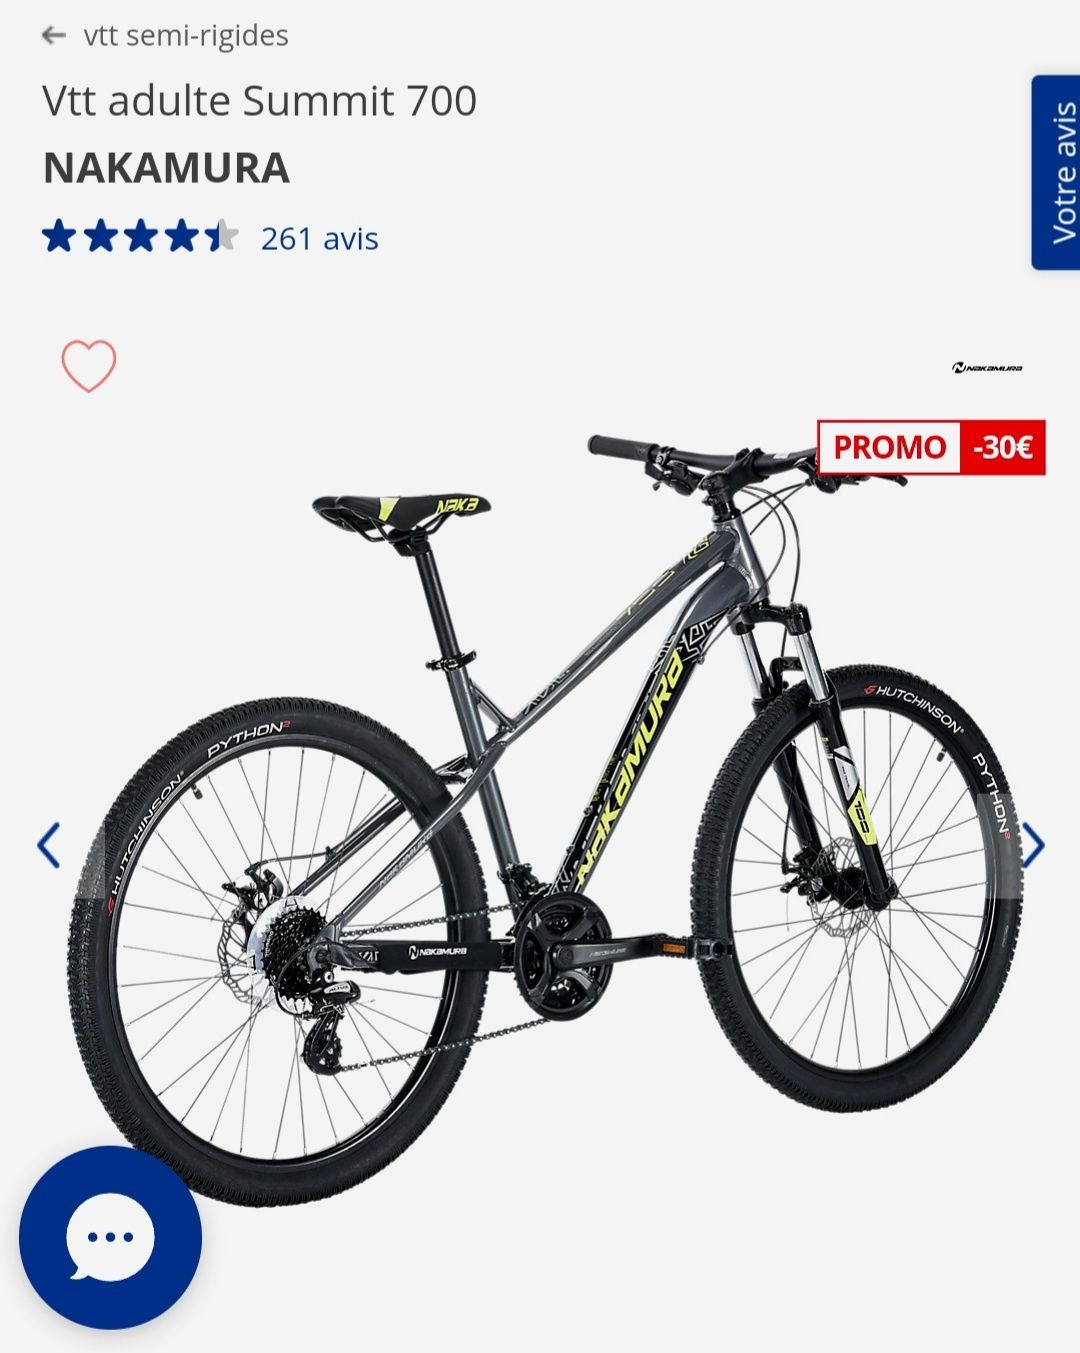 Nowy rower Nakamura summit 700